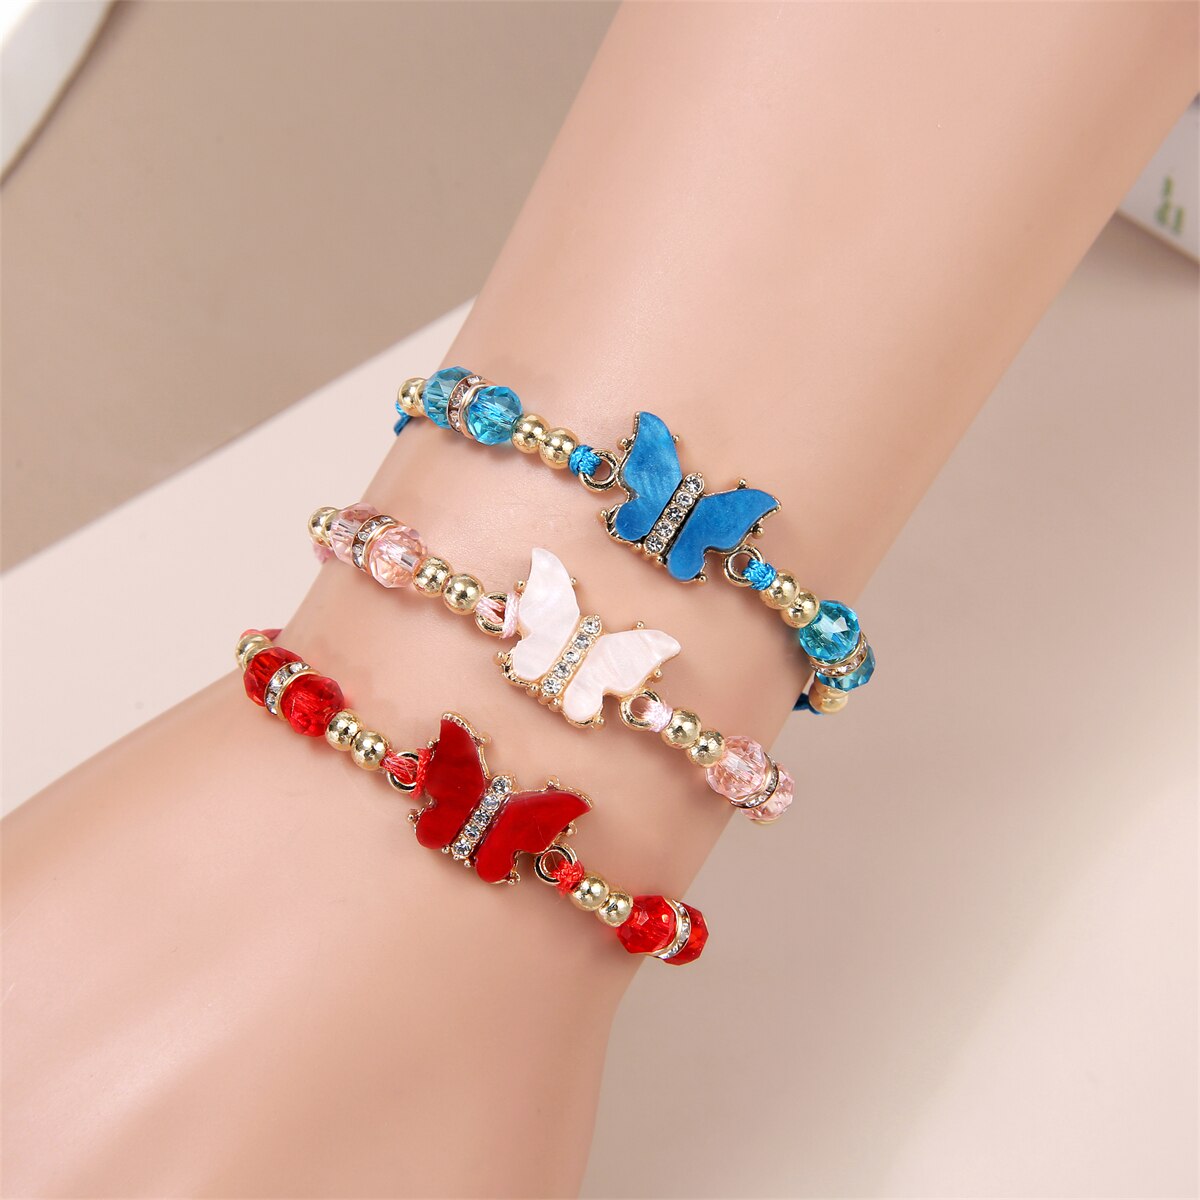 Bohemia Butterfly Crystal Woven Bracelet Set Colorful Rhinestone Adjustable Rope Ankle Bracelets for Women Jewelry